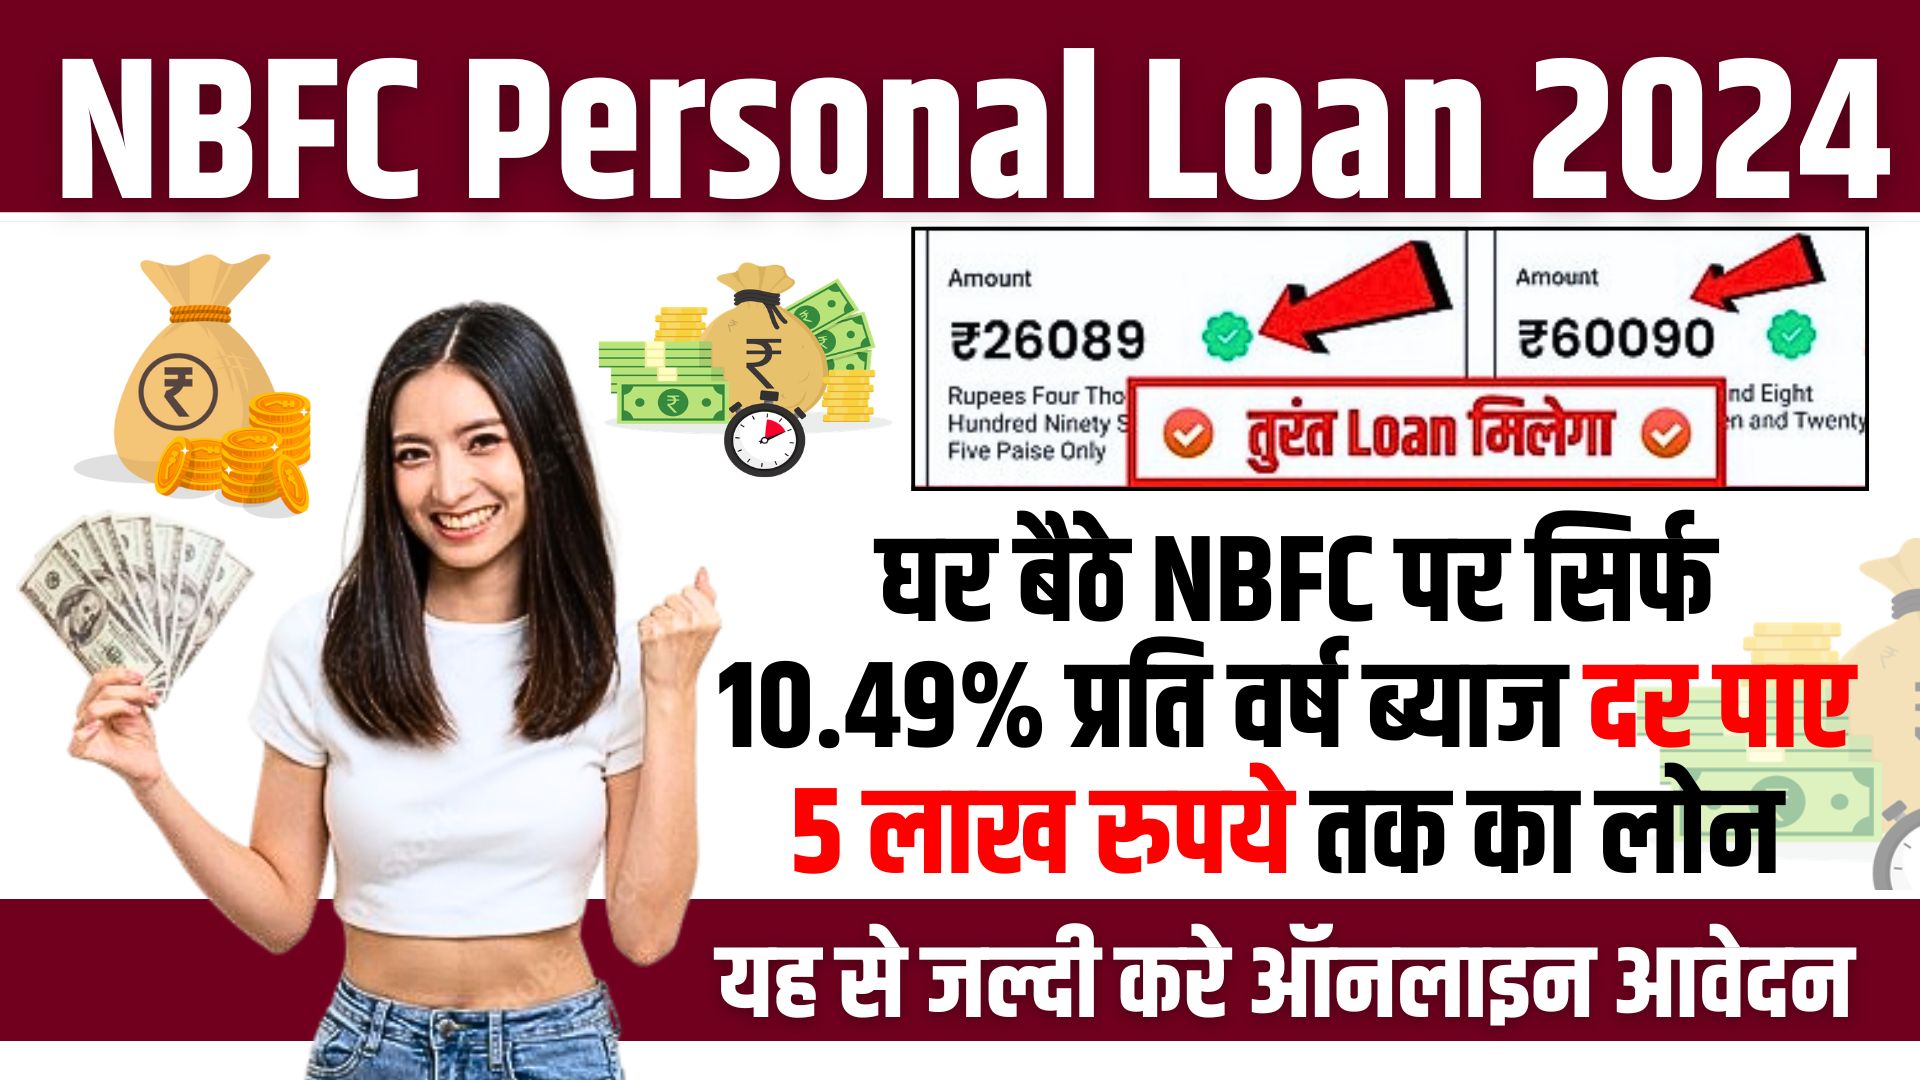 NBFC Personal Loan